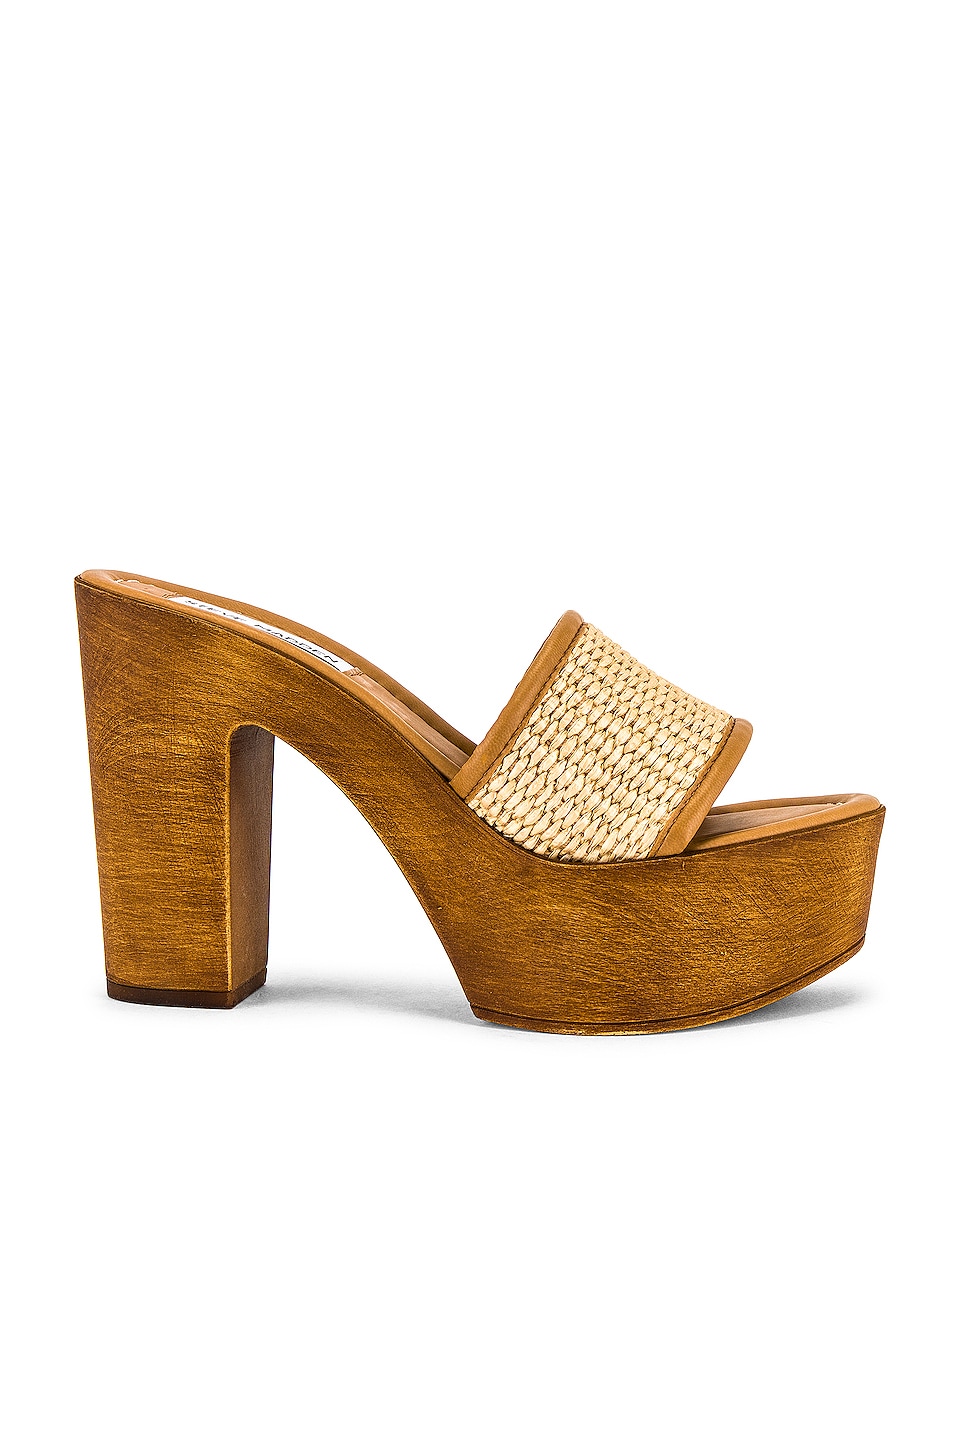 Steve Madden Marisol Platform Sandal in Natural Raffia | REVOLVE